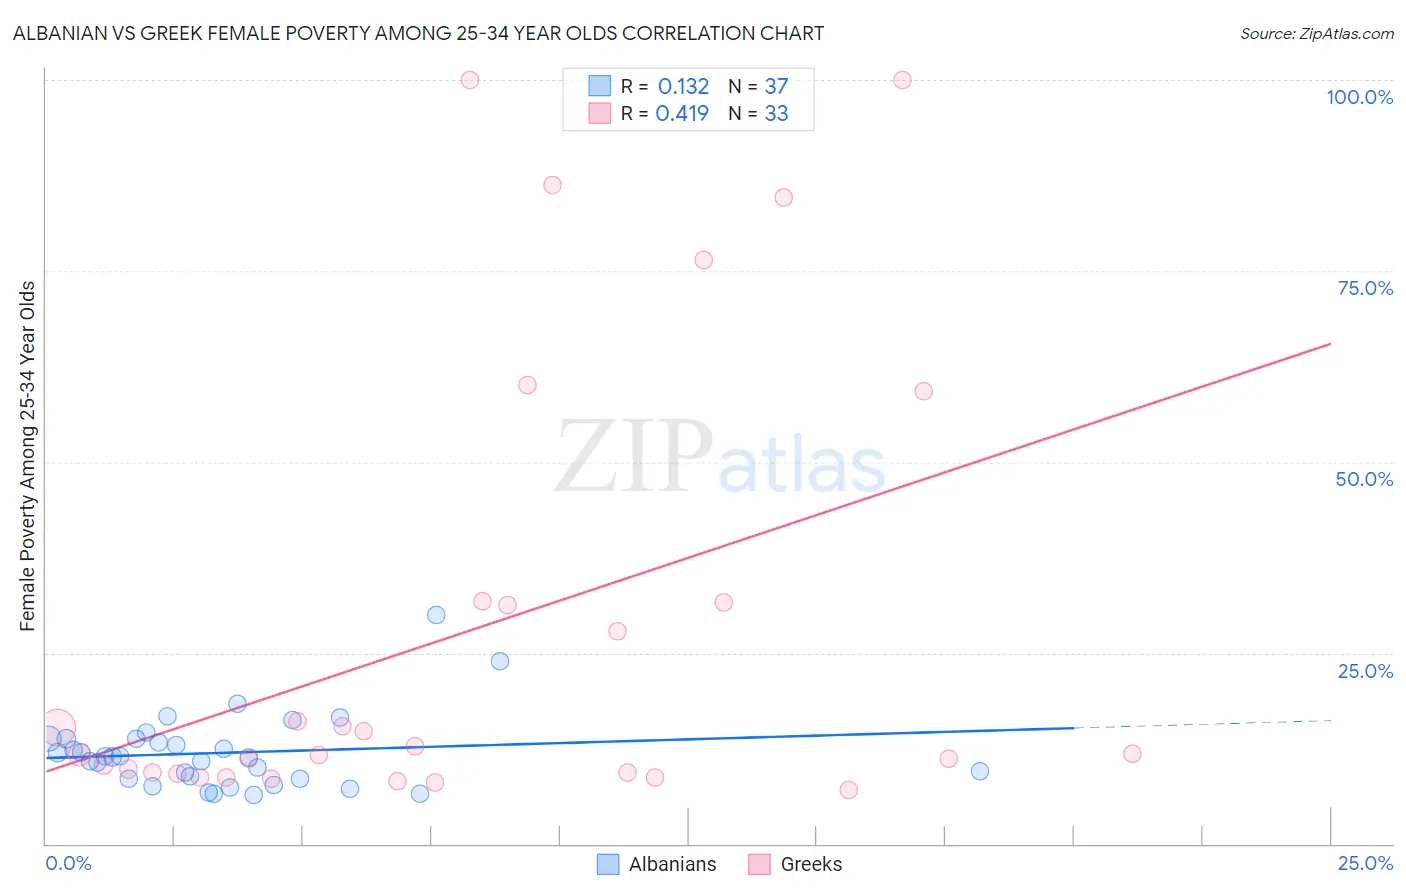 Albanian vs Greek Female Poverty Among 25-34 Year Olds